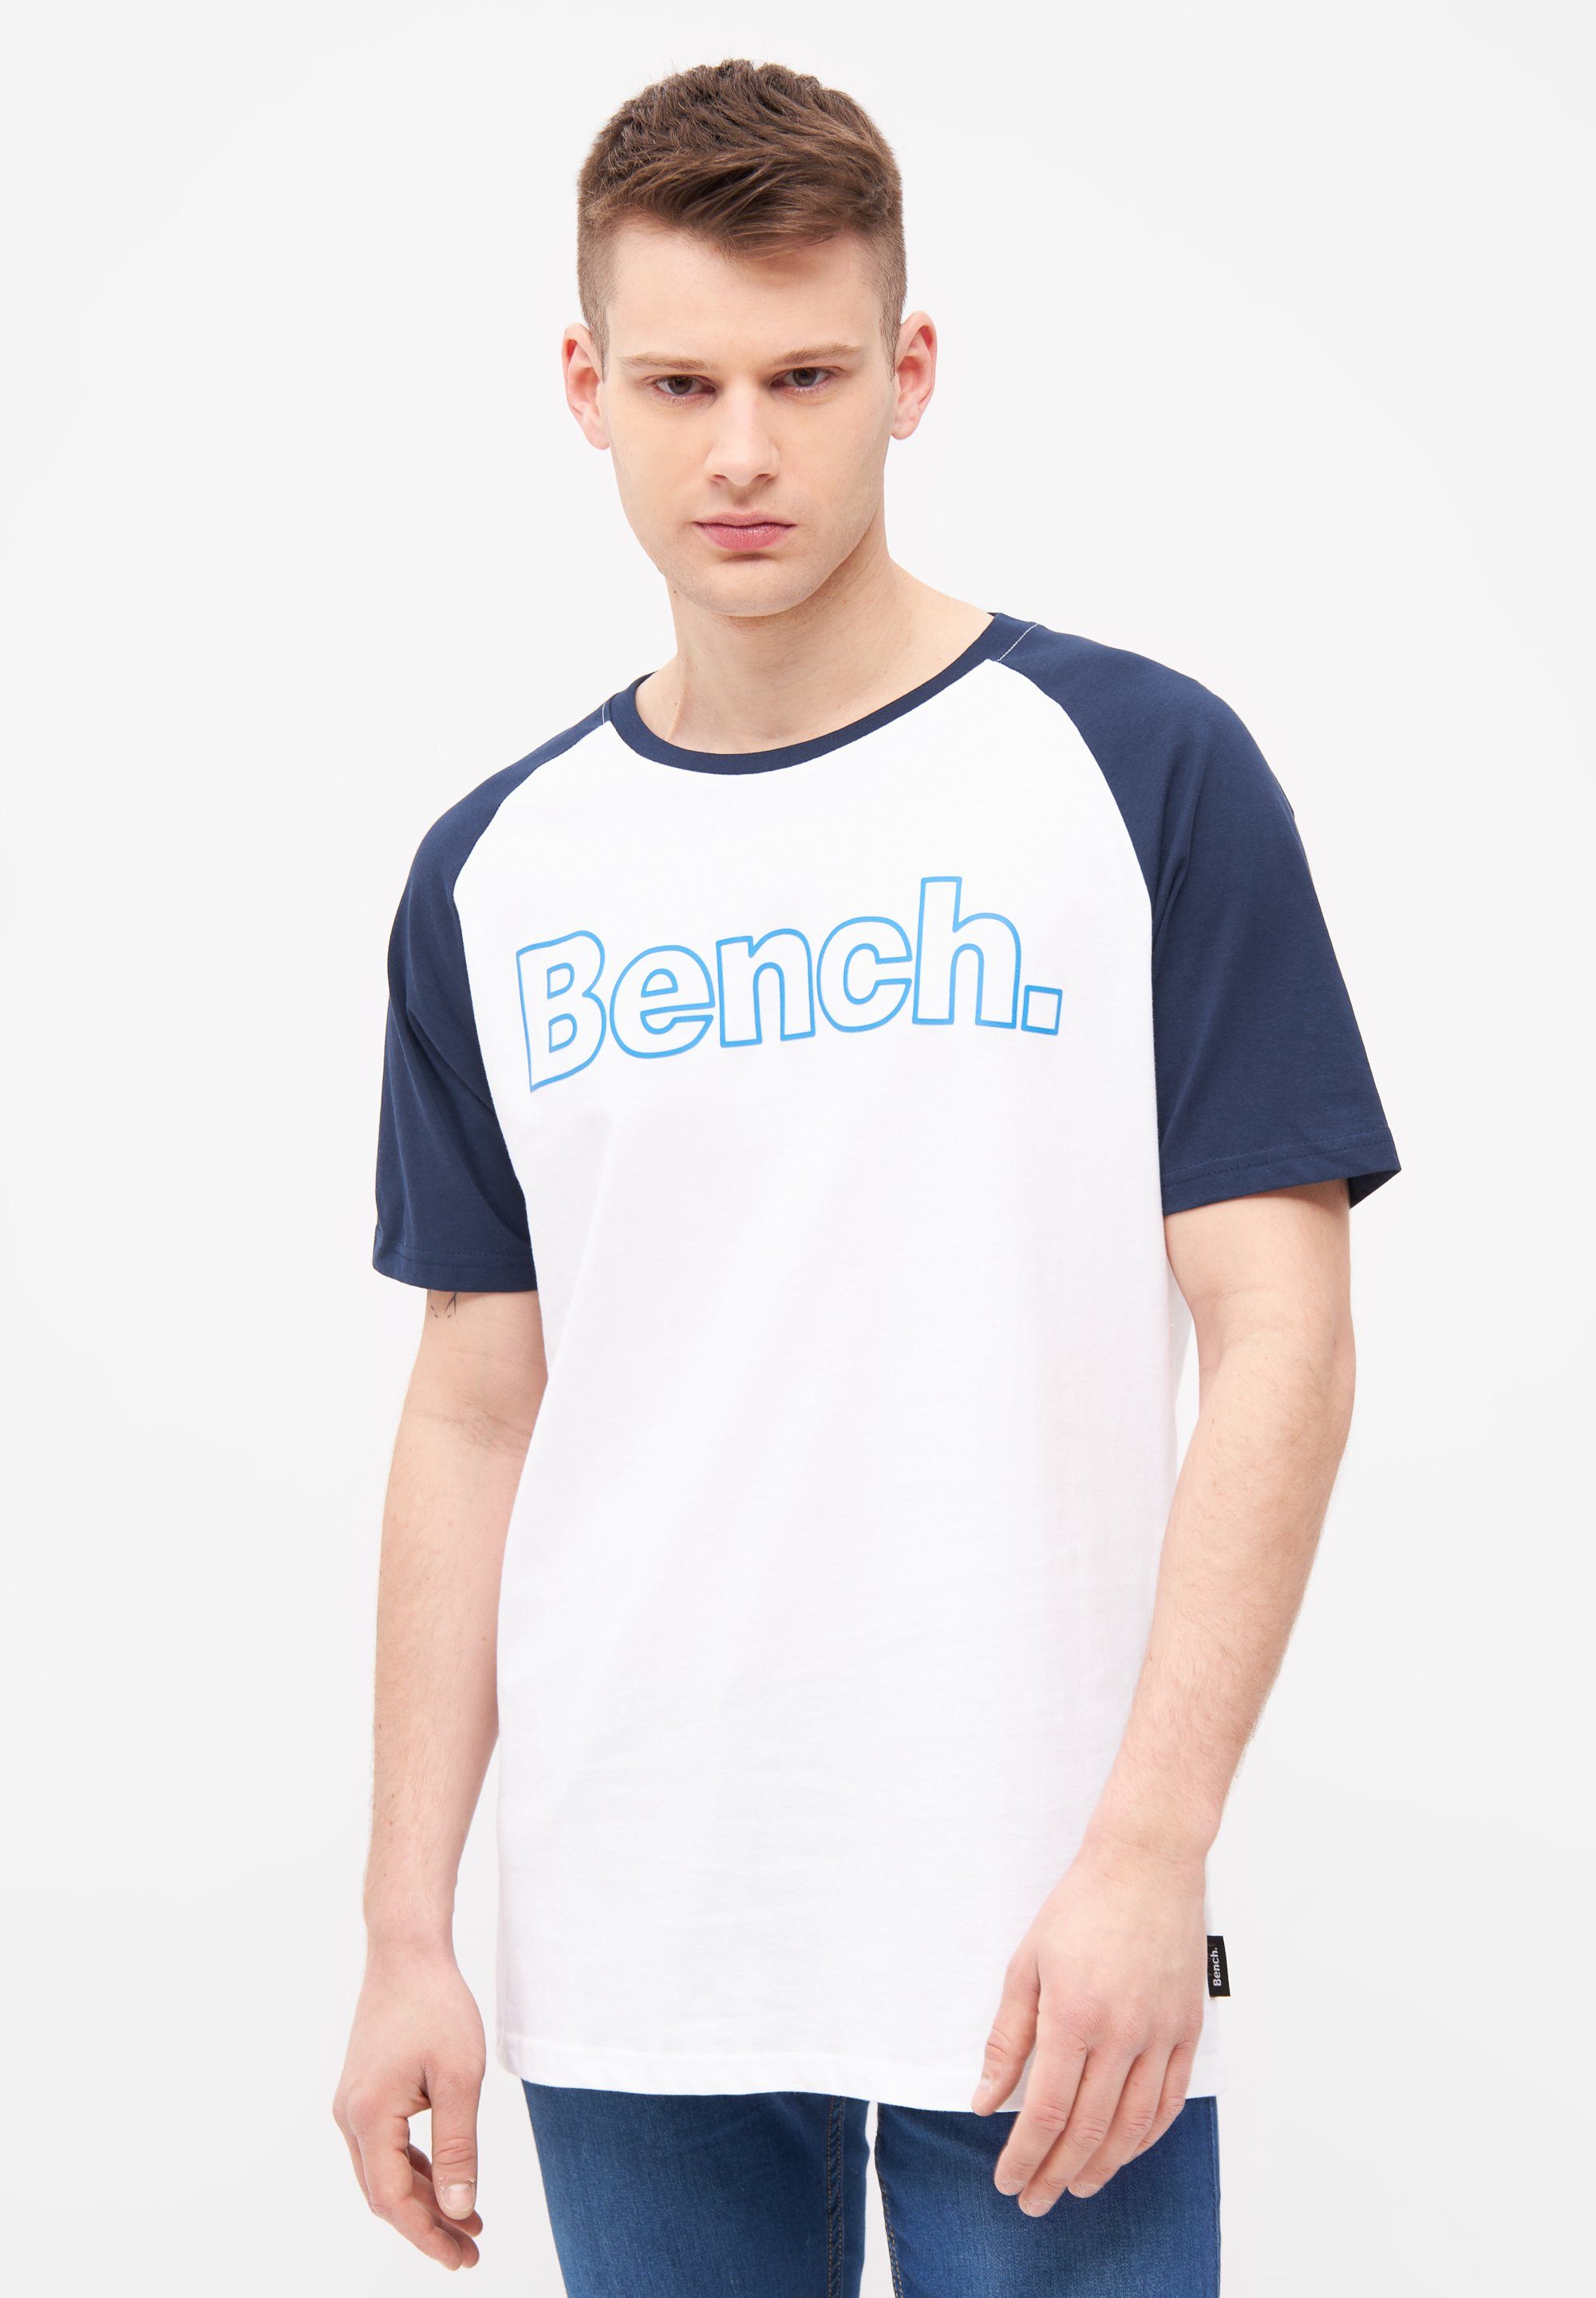 T-Shirt Angabe Bench. Rockwell Keine